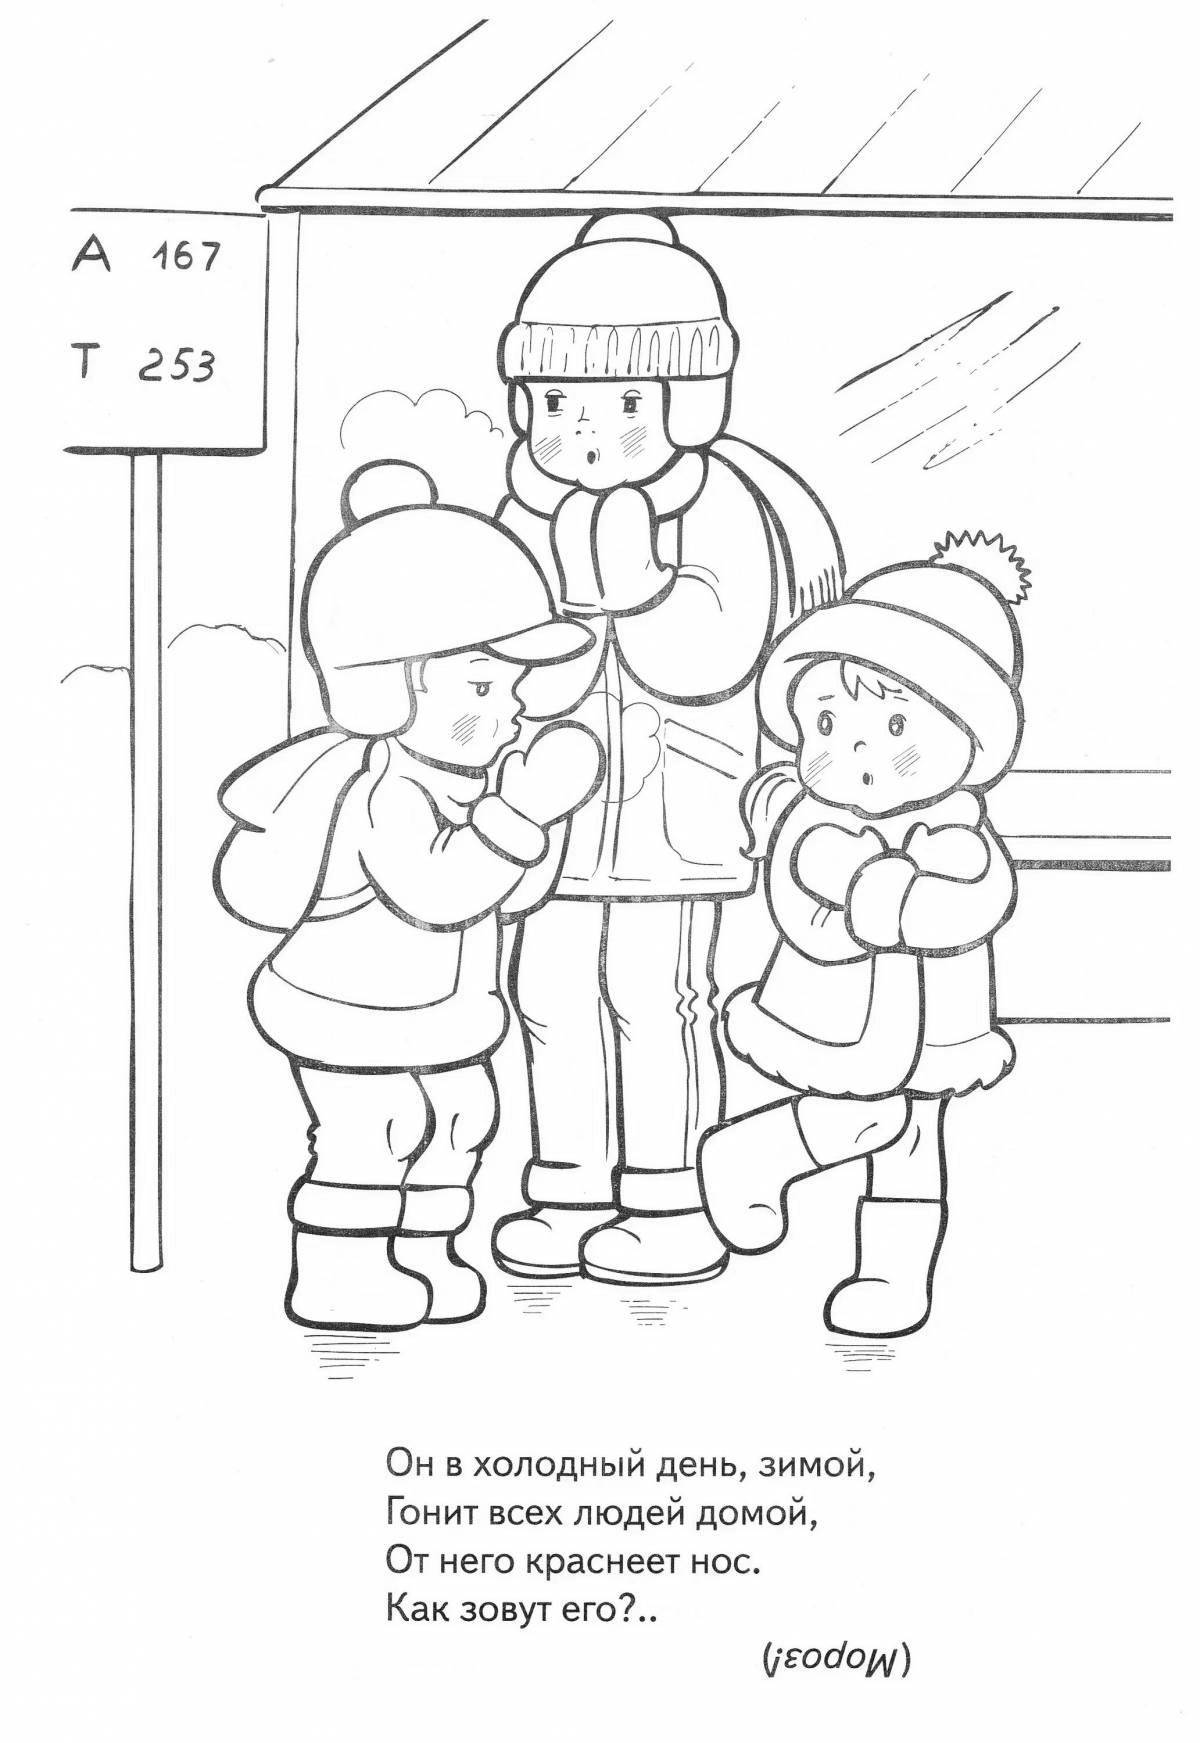 Preschool Winter Safety #14